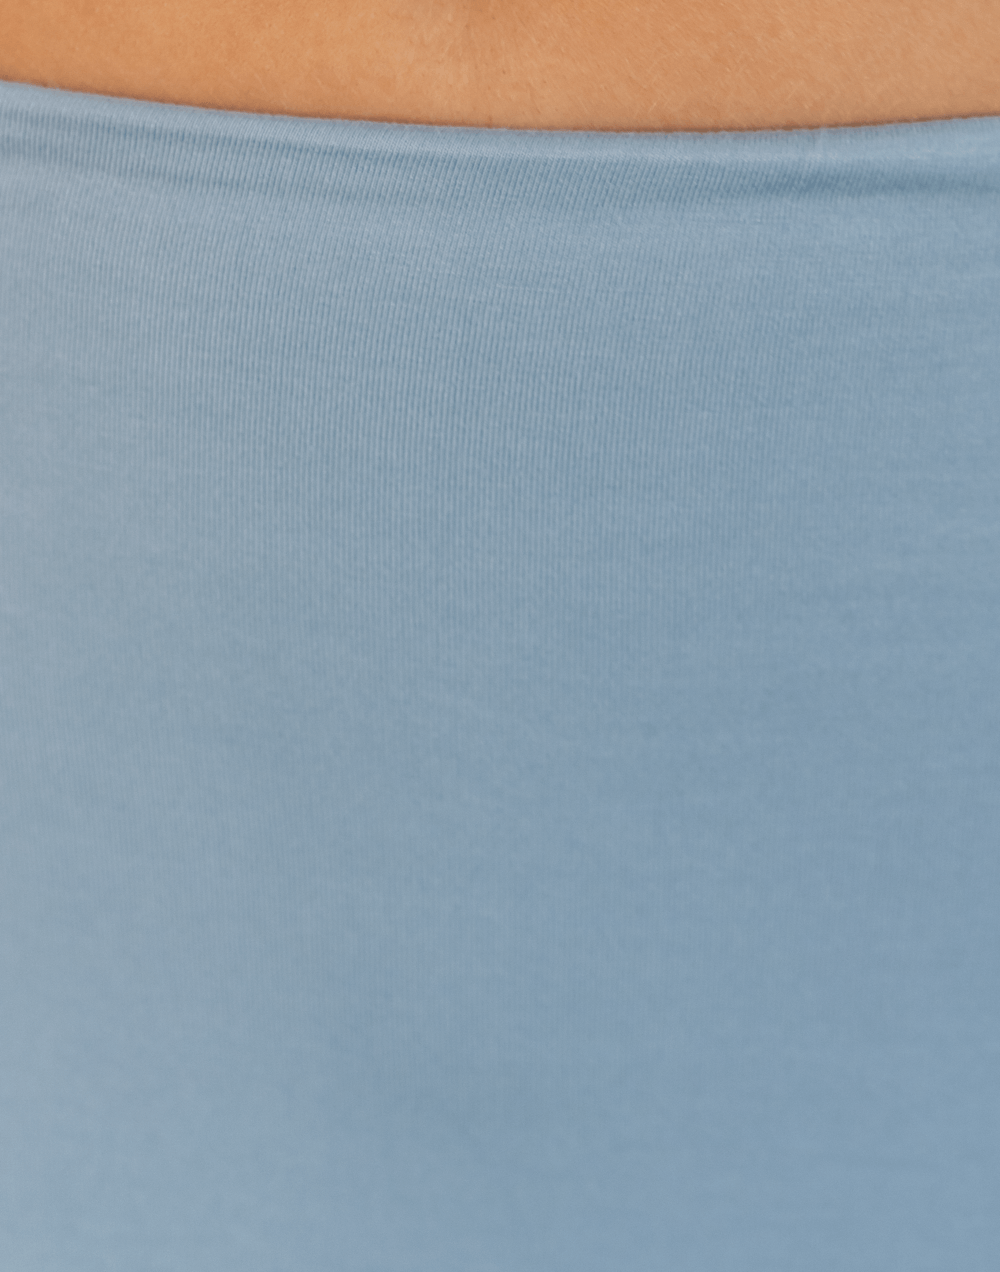 Lazy Days Maxi Skirt (Steel Blue) - High Waisted Maxi Skirt - Women's Skirt - Charcoal Clothing